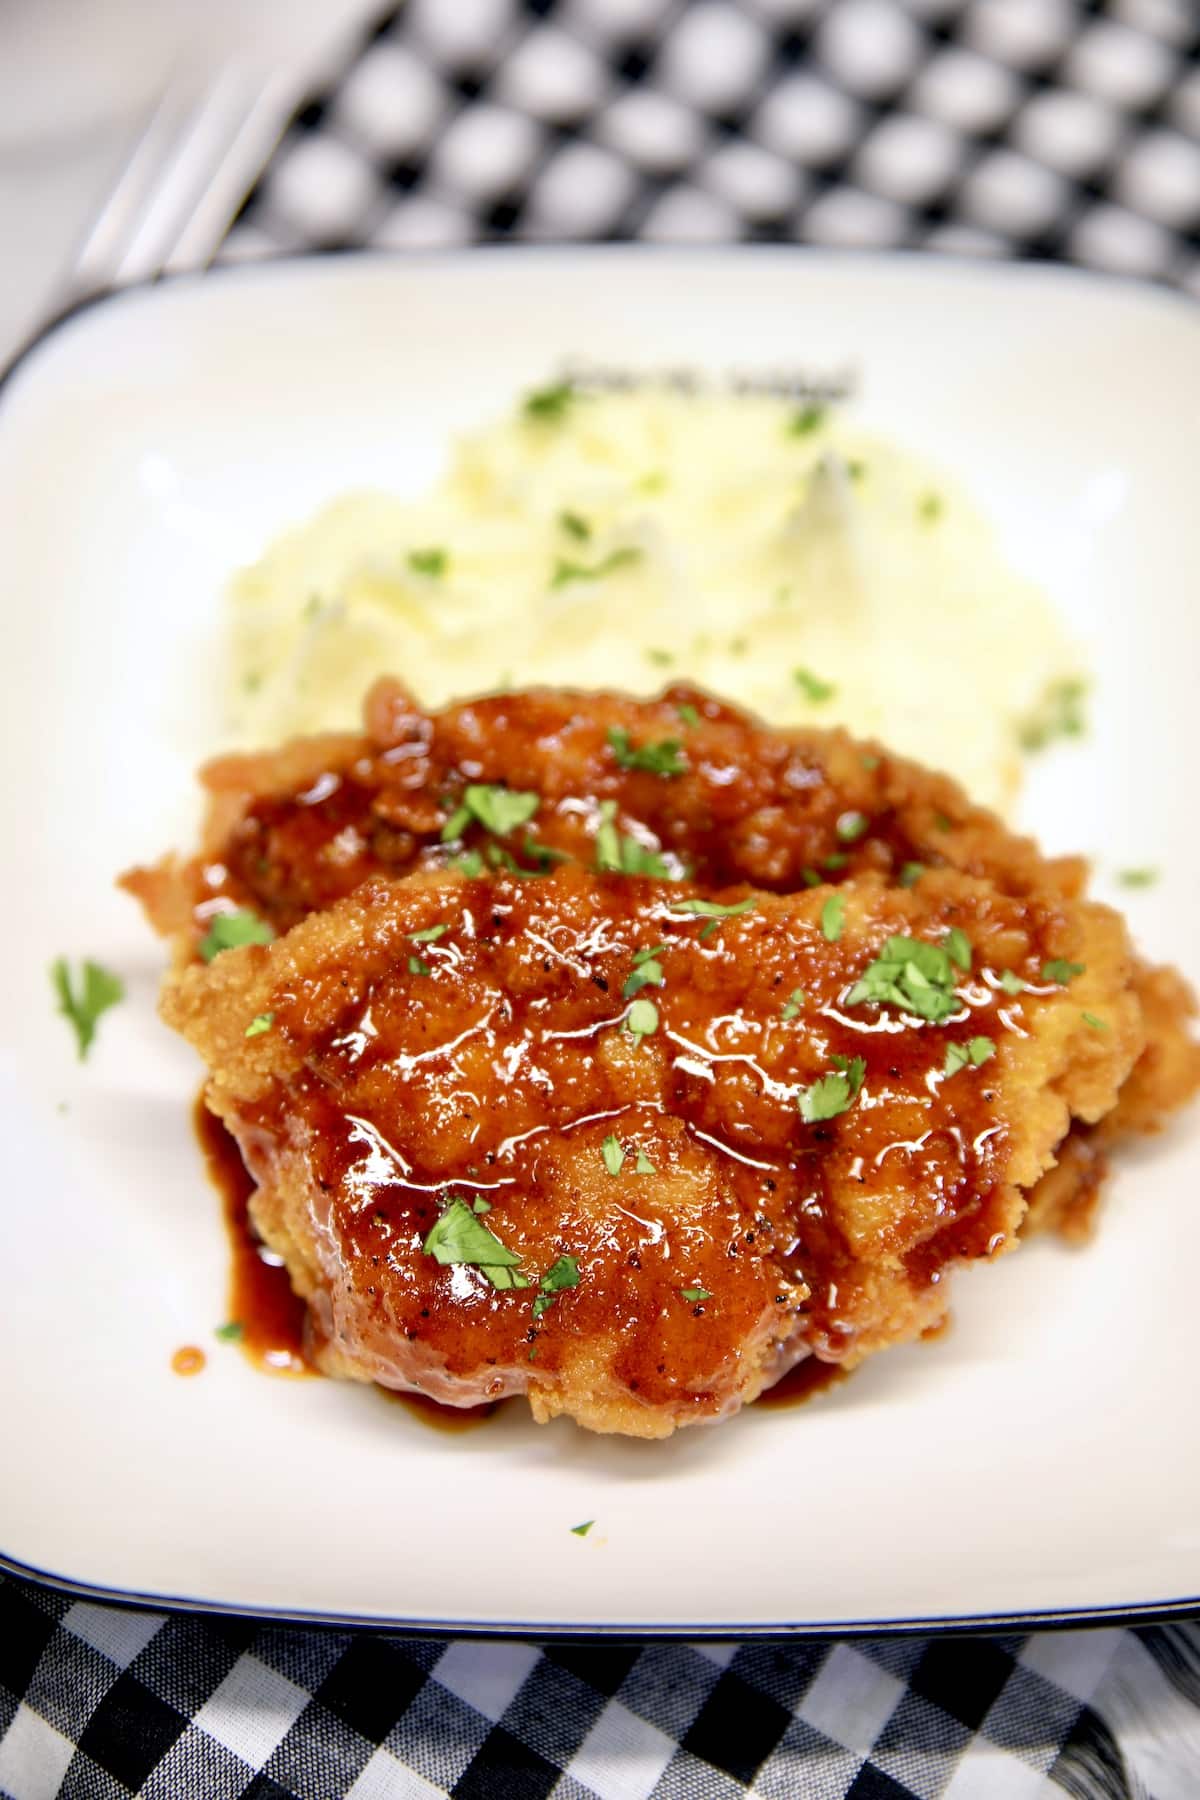 Crispy pork cutlets with honey garlic sauce on mashed potatoes.